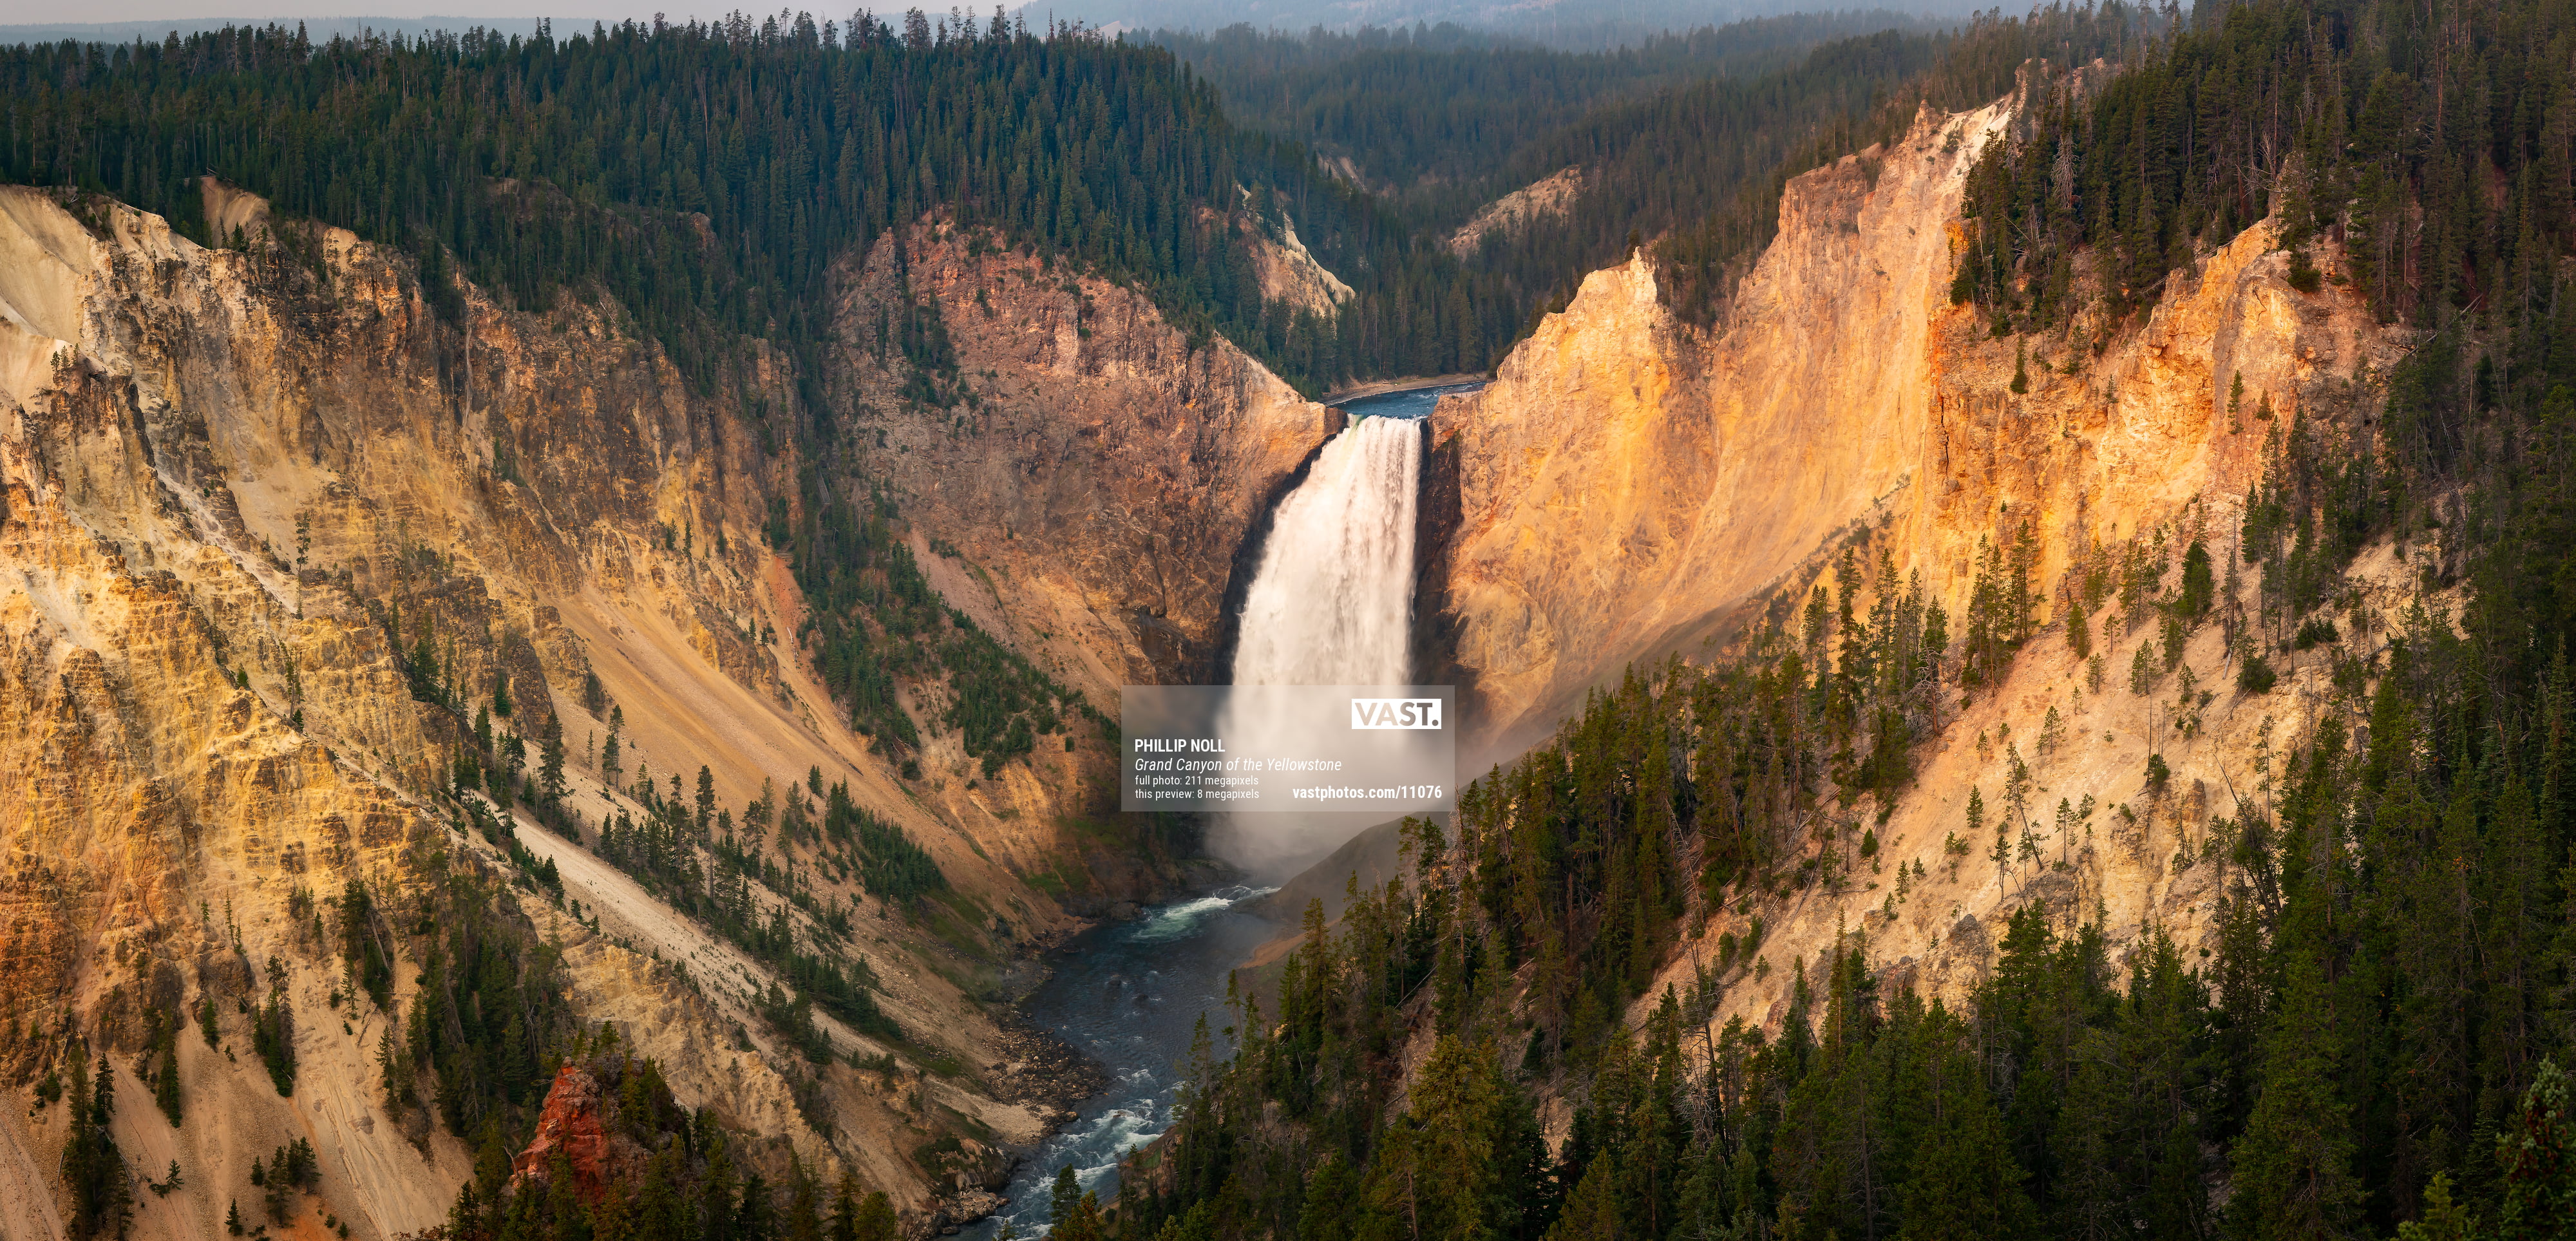 National Park Postcard Album, Yellowstone, Grand Canyon, Photo